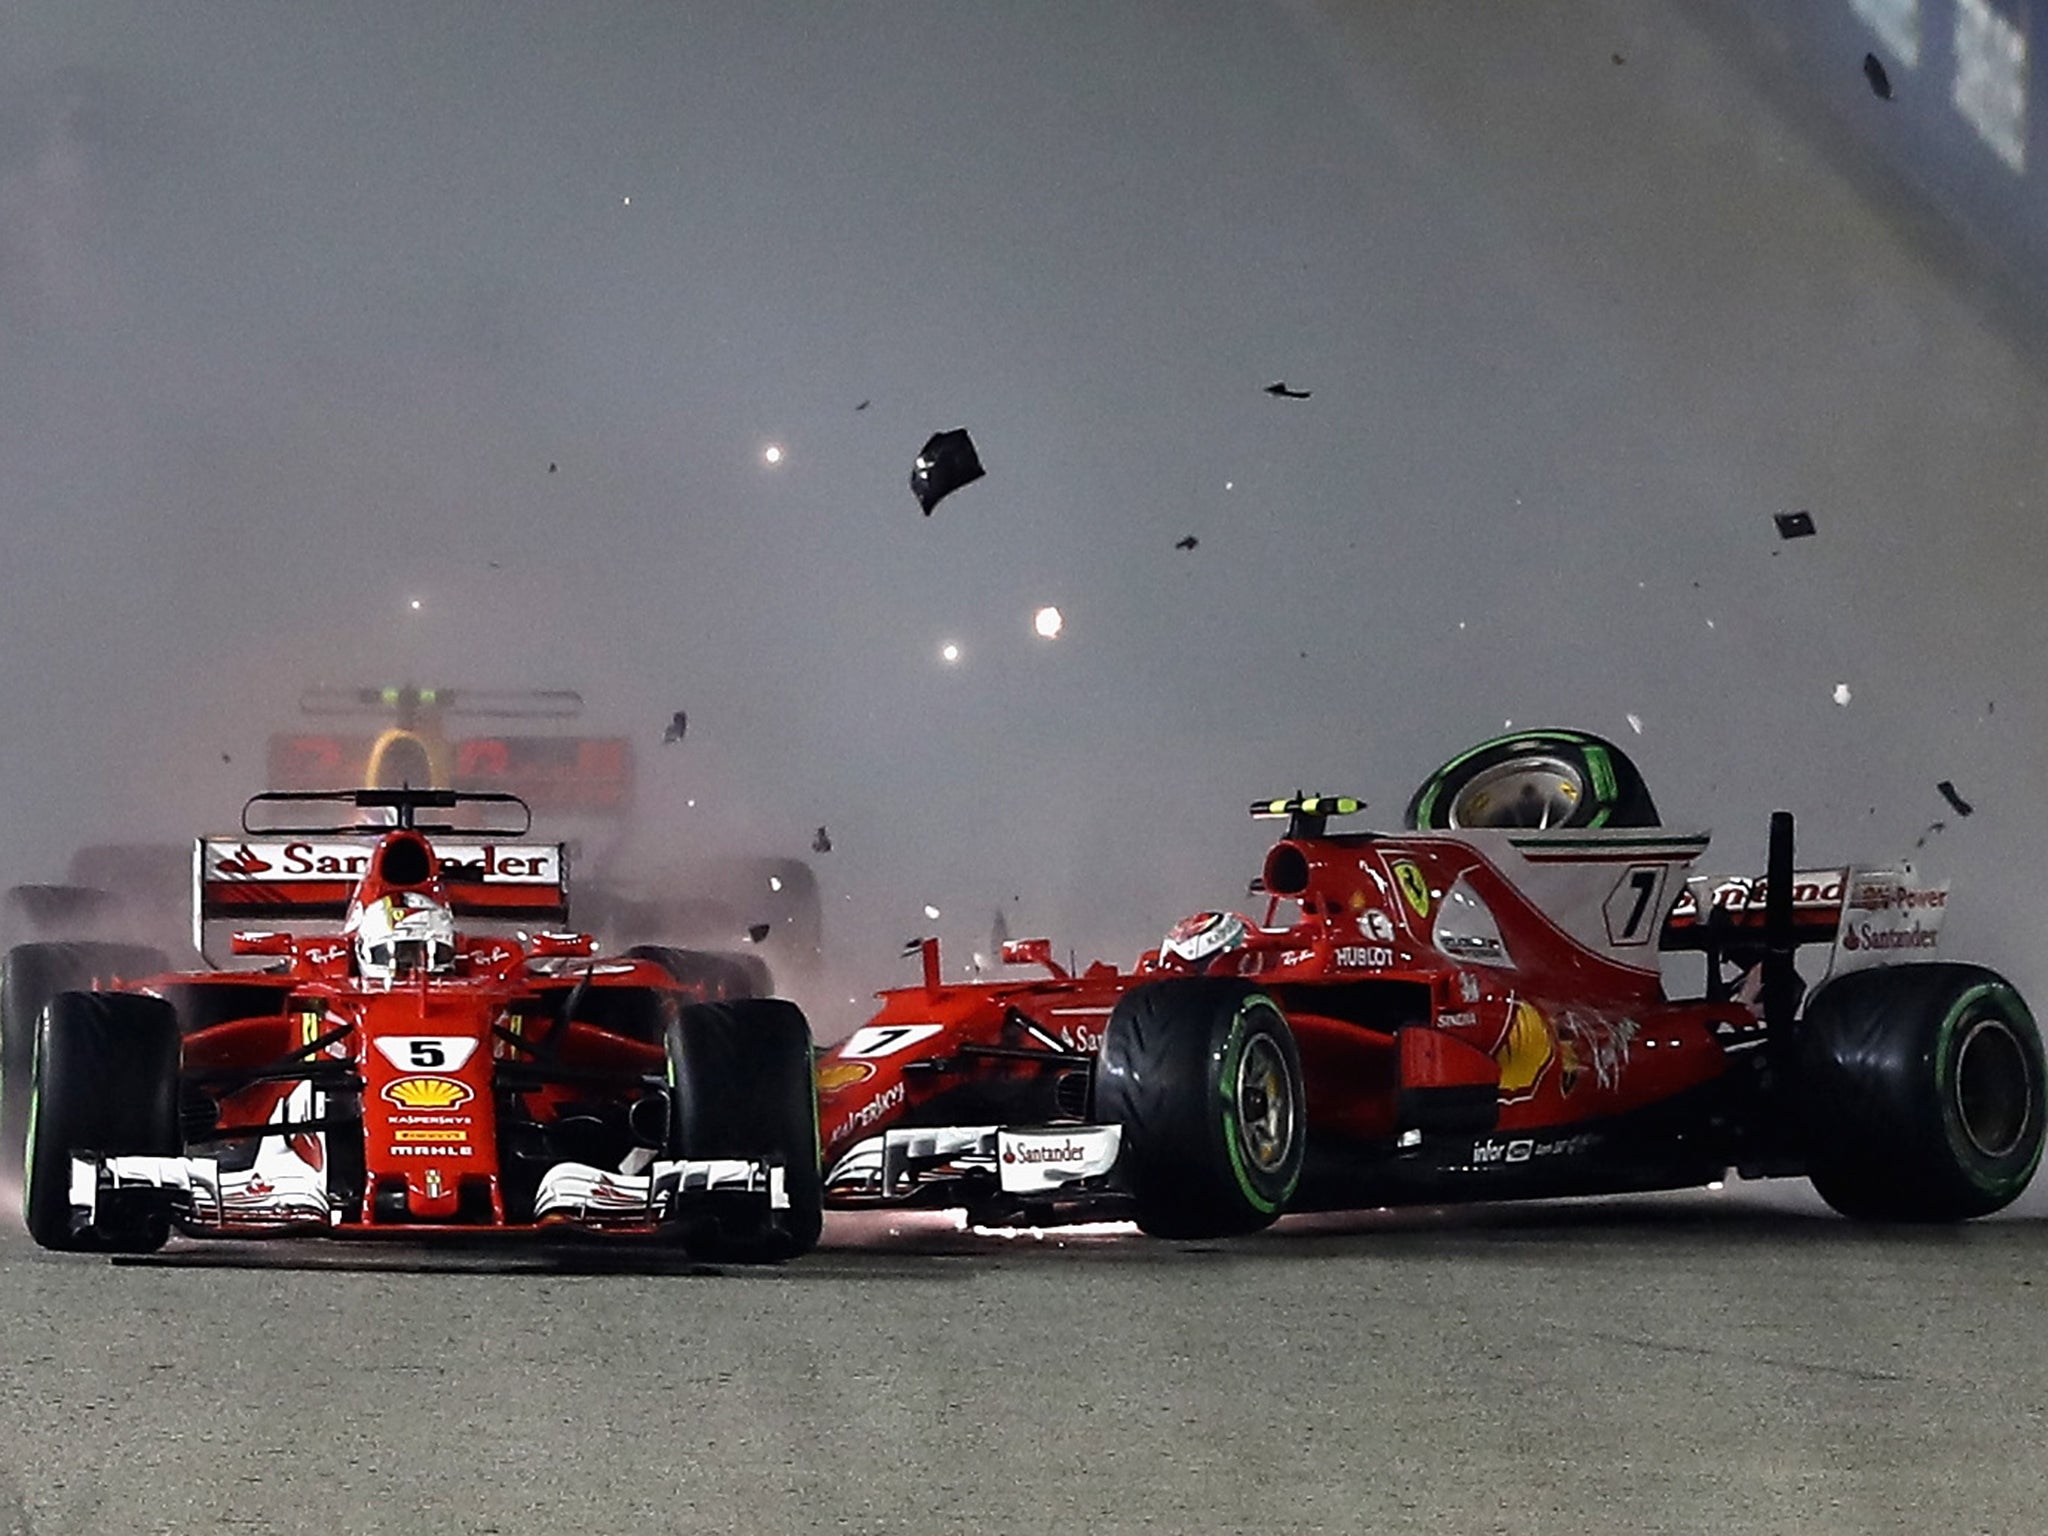 Vettel was involved in a first corner accident with Ferrari teammate Kimi Raikkonen and Red Bull's Max Verstappen